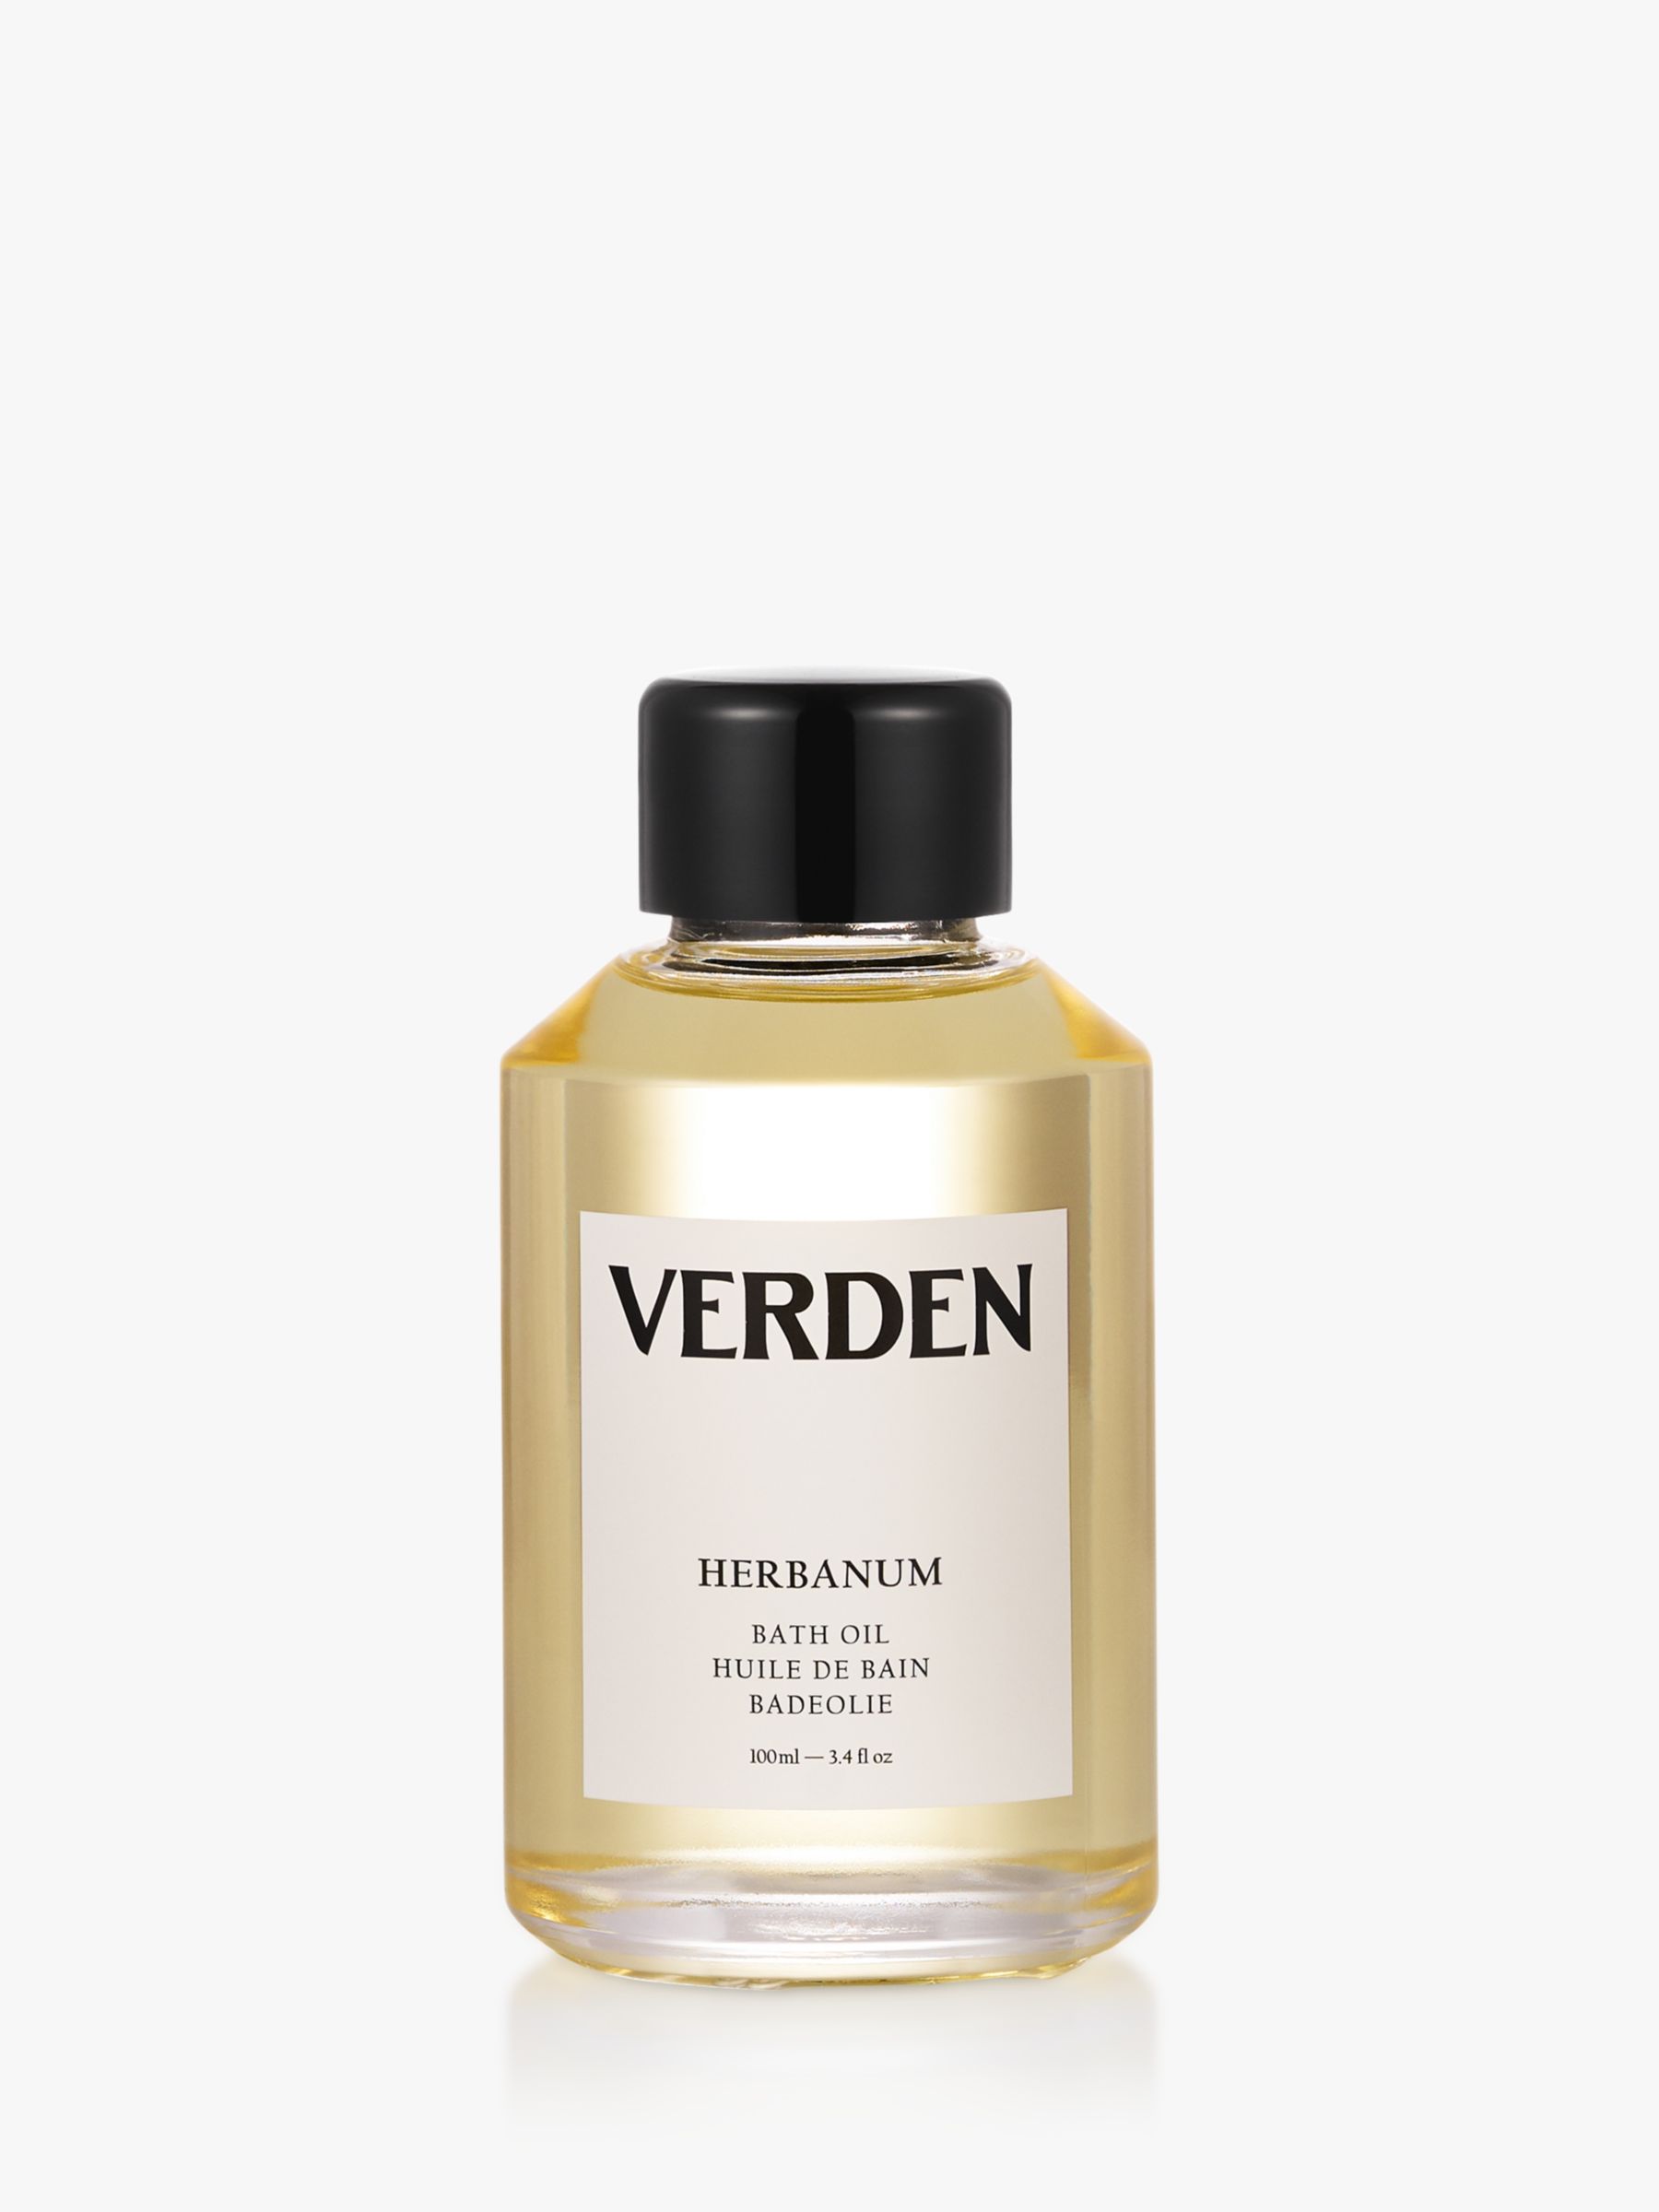 VERDEN Herbanum Bath Oil, 100ml 1